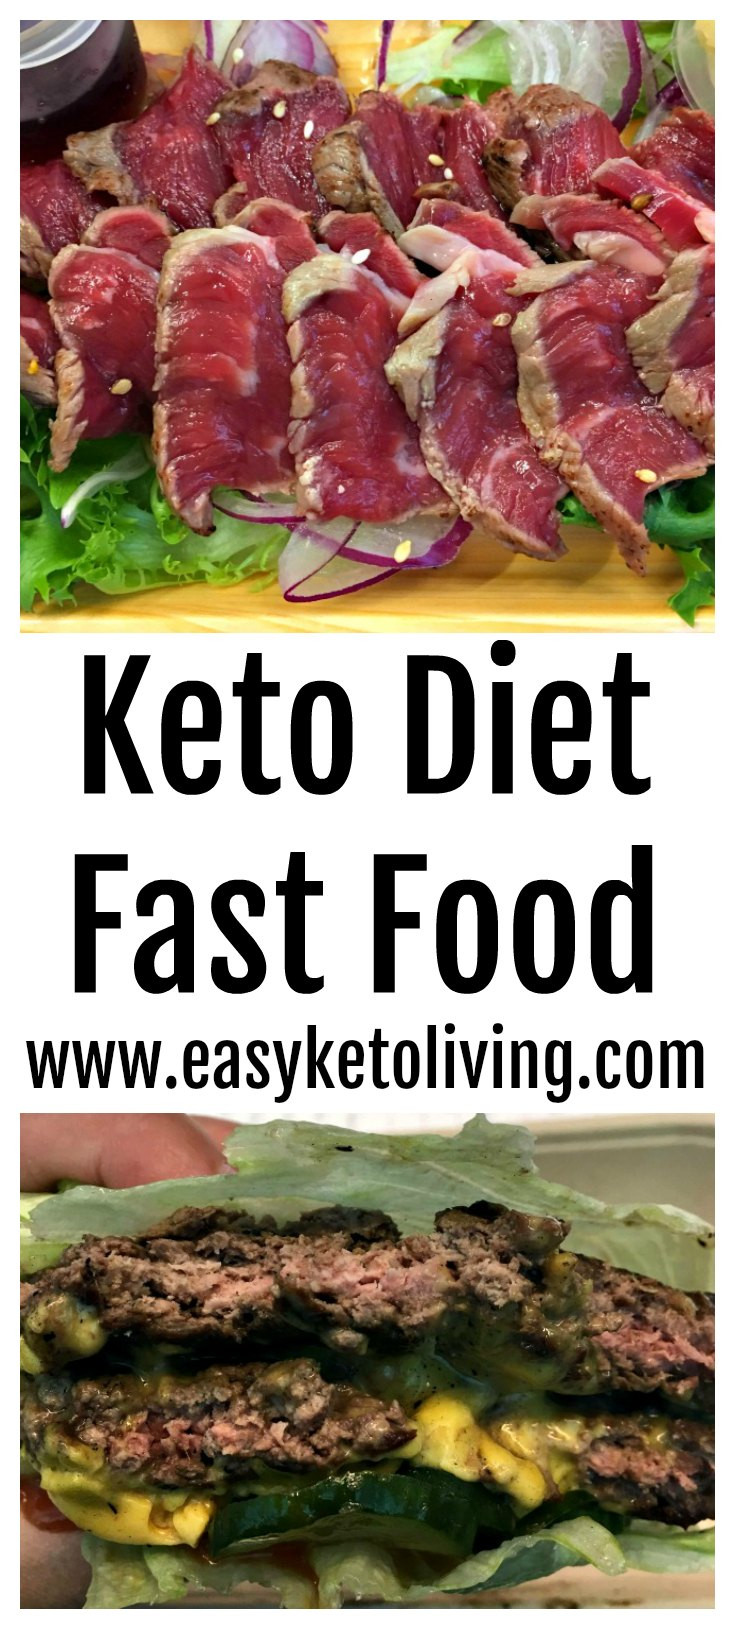 Fast Food Keto Diet
 5 Keto Fast Food Options Low Carb & Ketogenic Fast Food